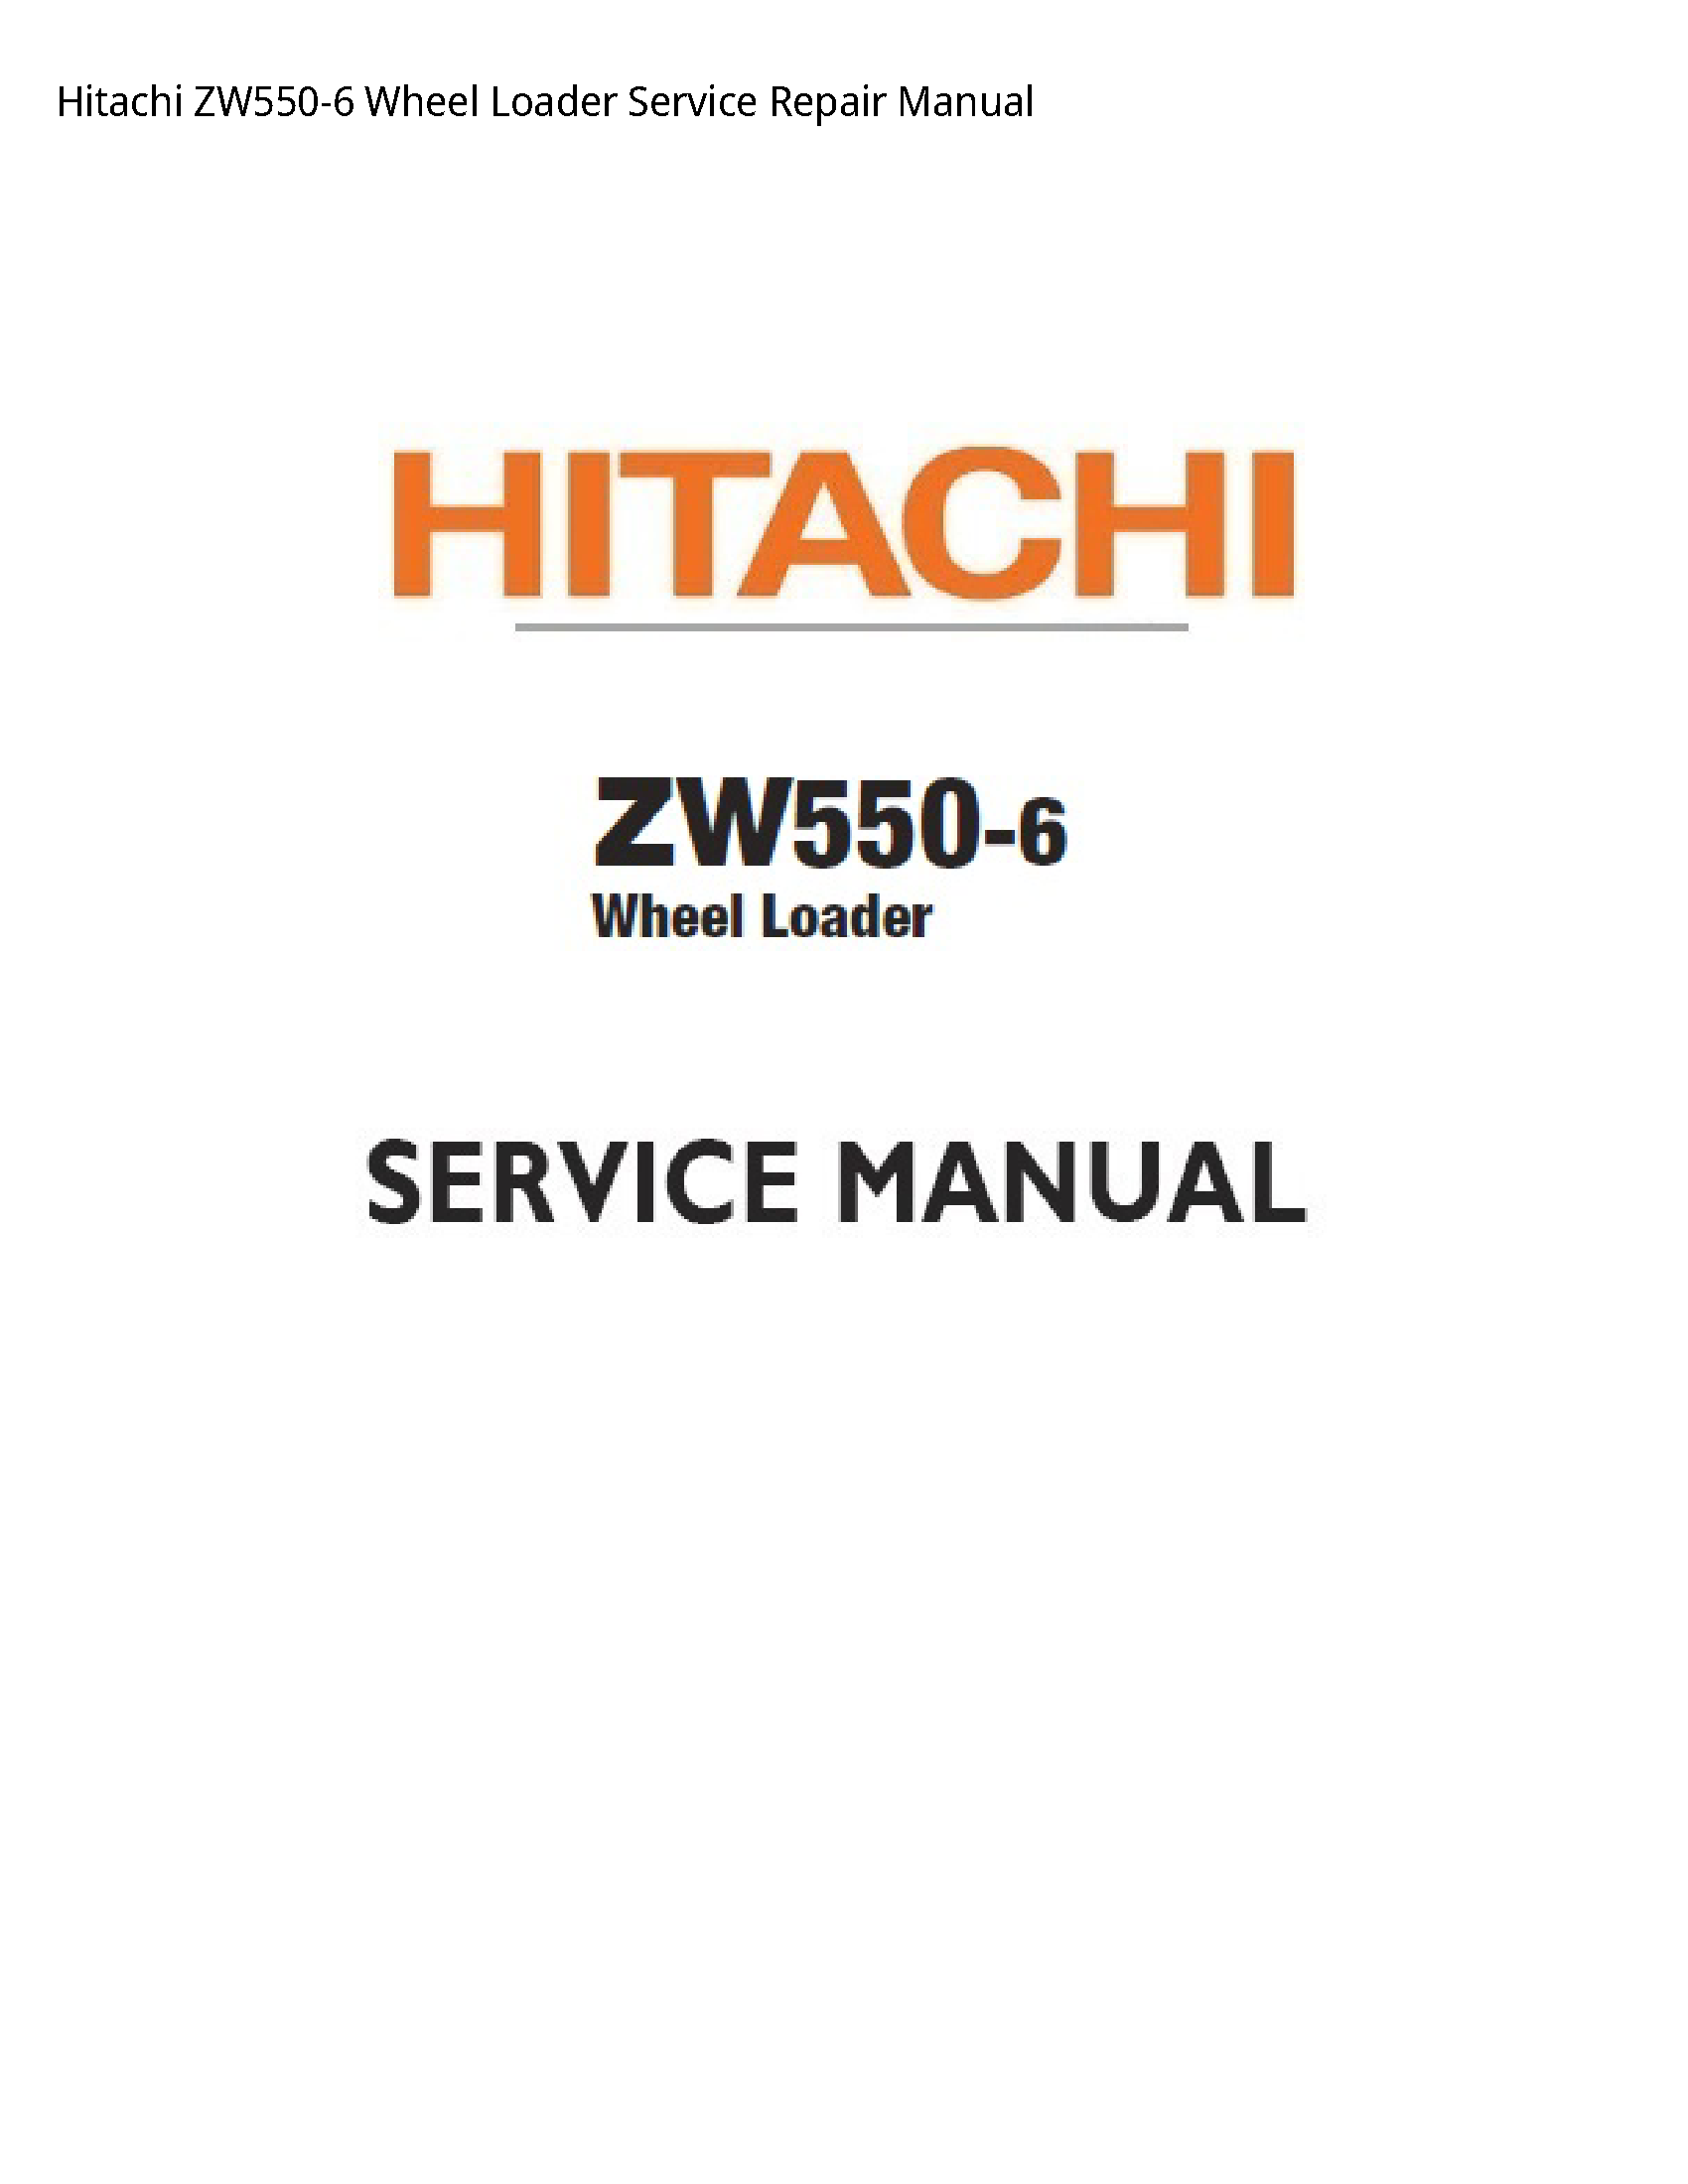 Hitachi ZW550-6 Wheel Loader manual